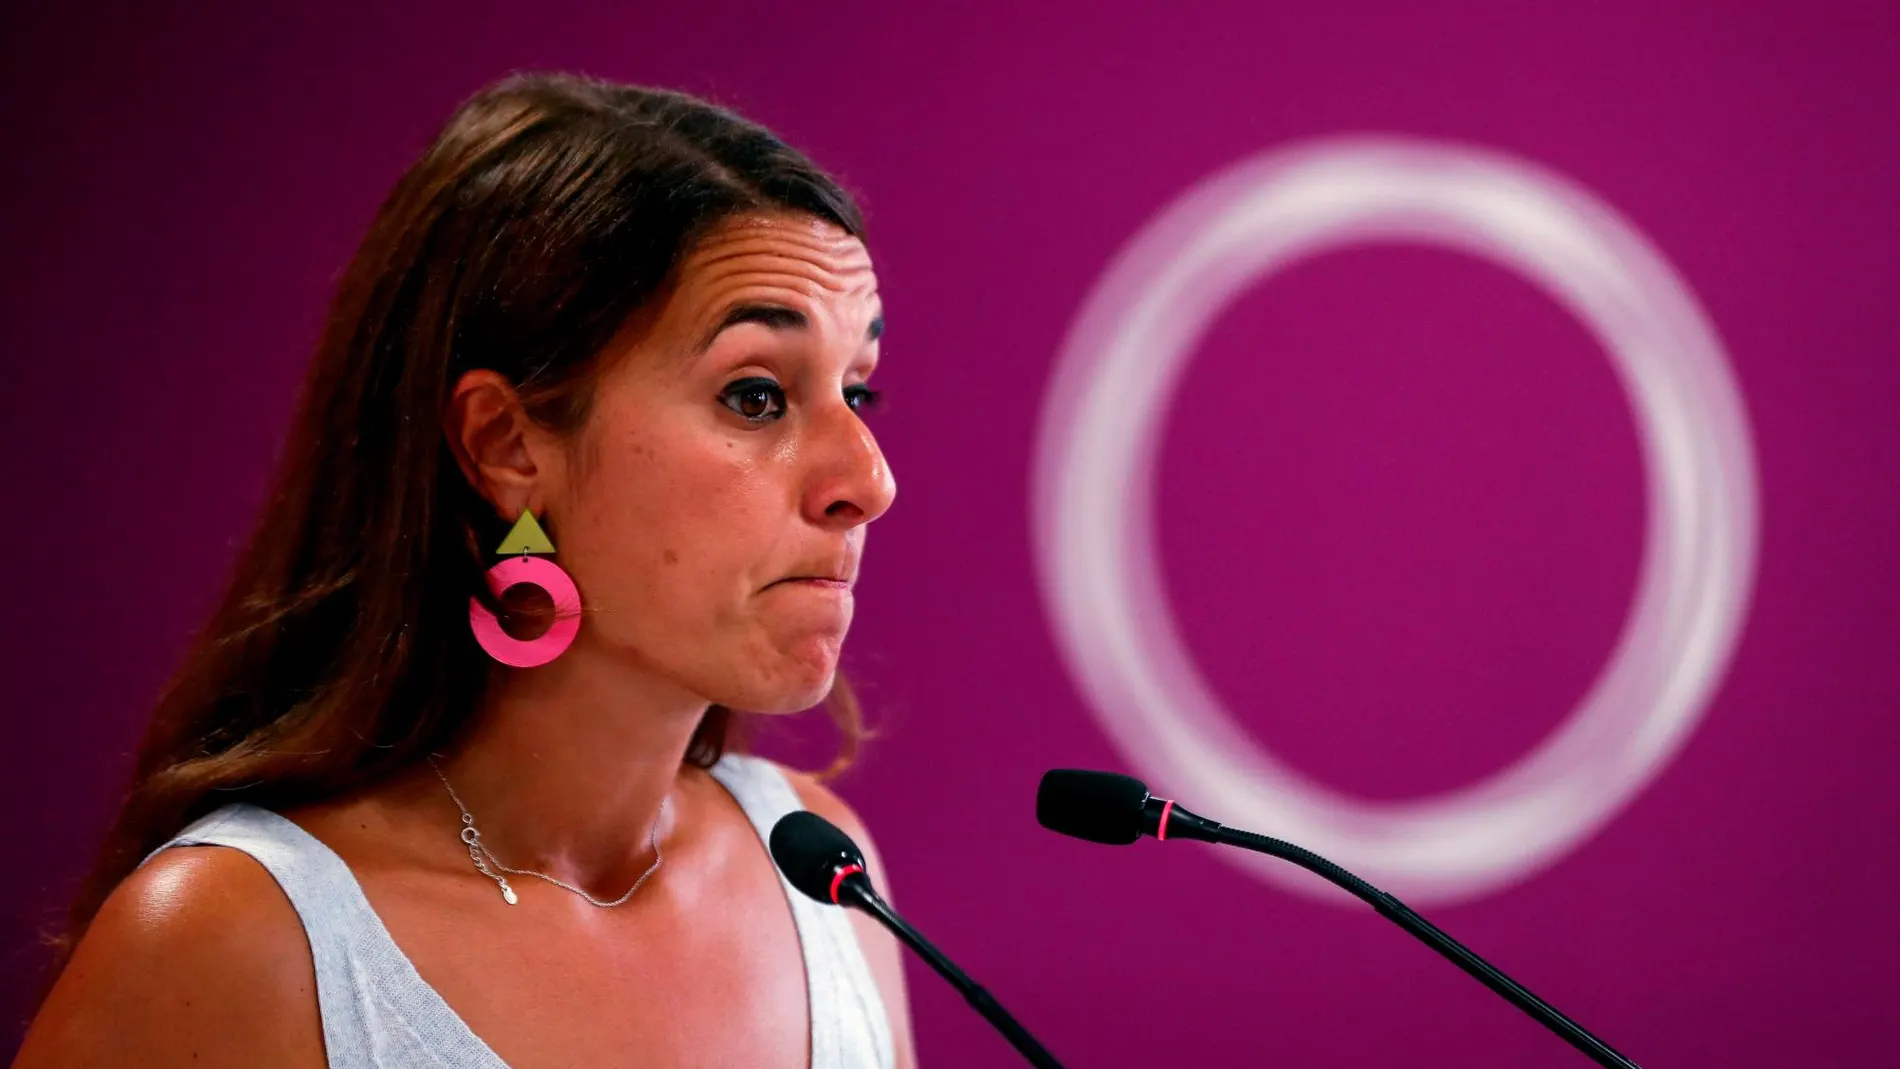 La portavoz de Podemos, Noelia Vera